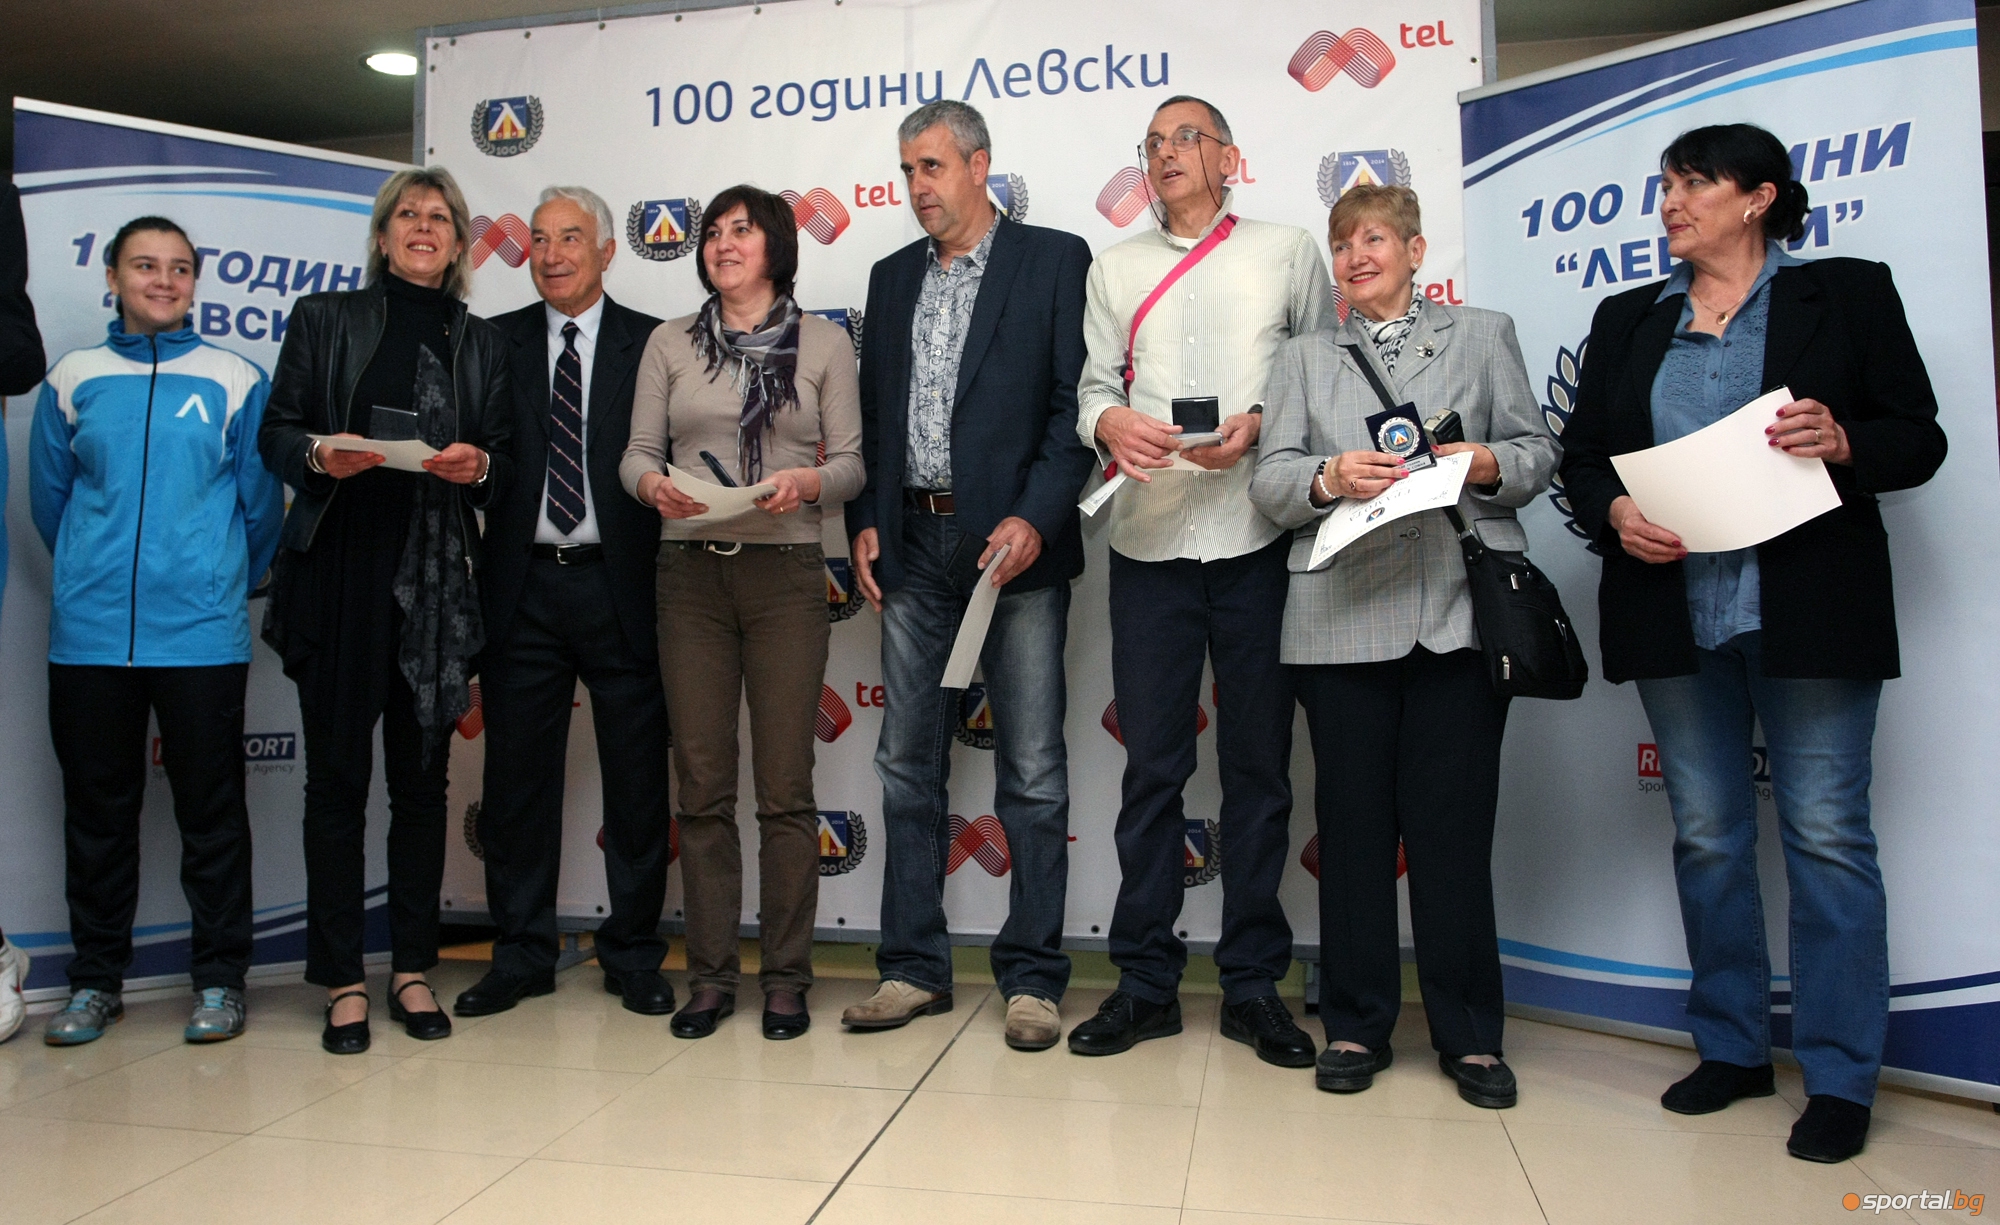 Волейболисти бяха удостоени с почетен знак "100 години Левски"